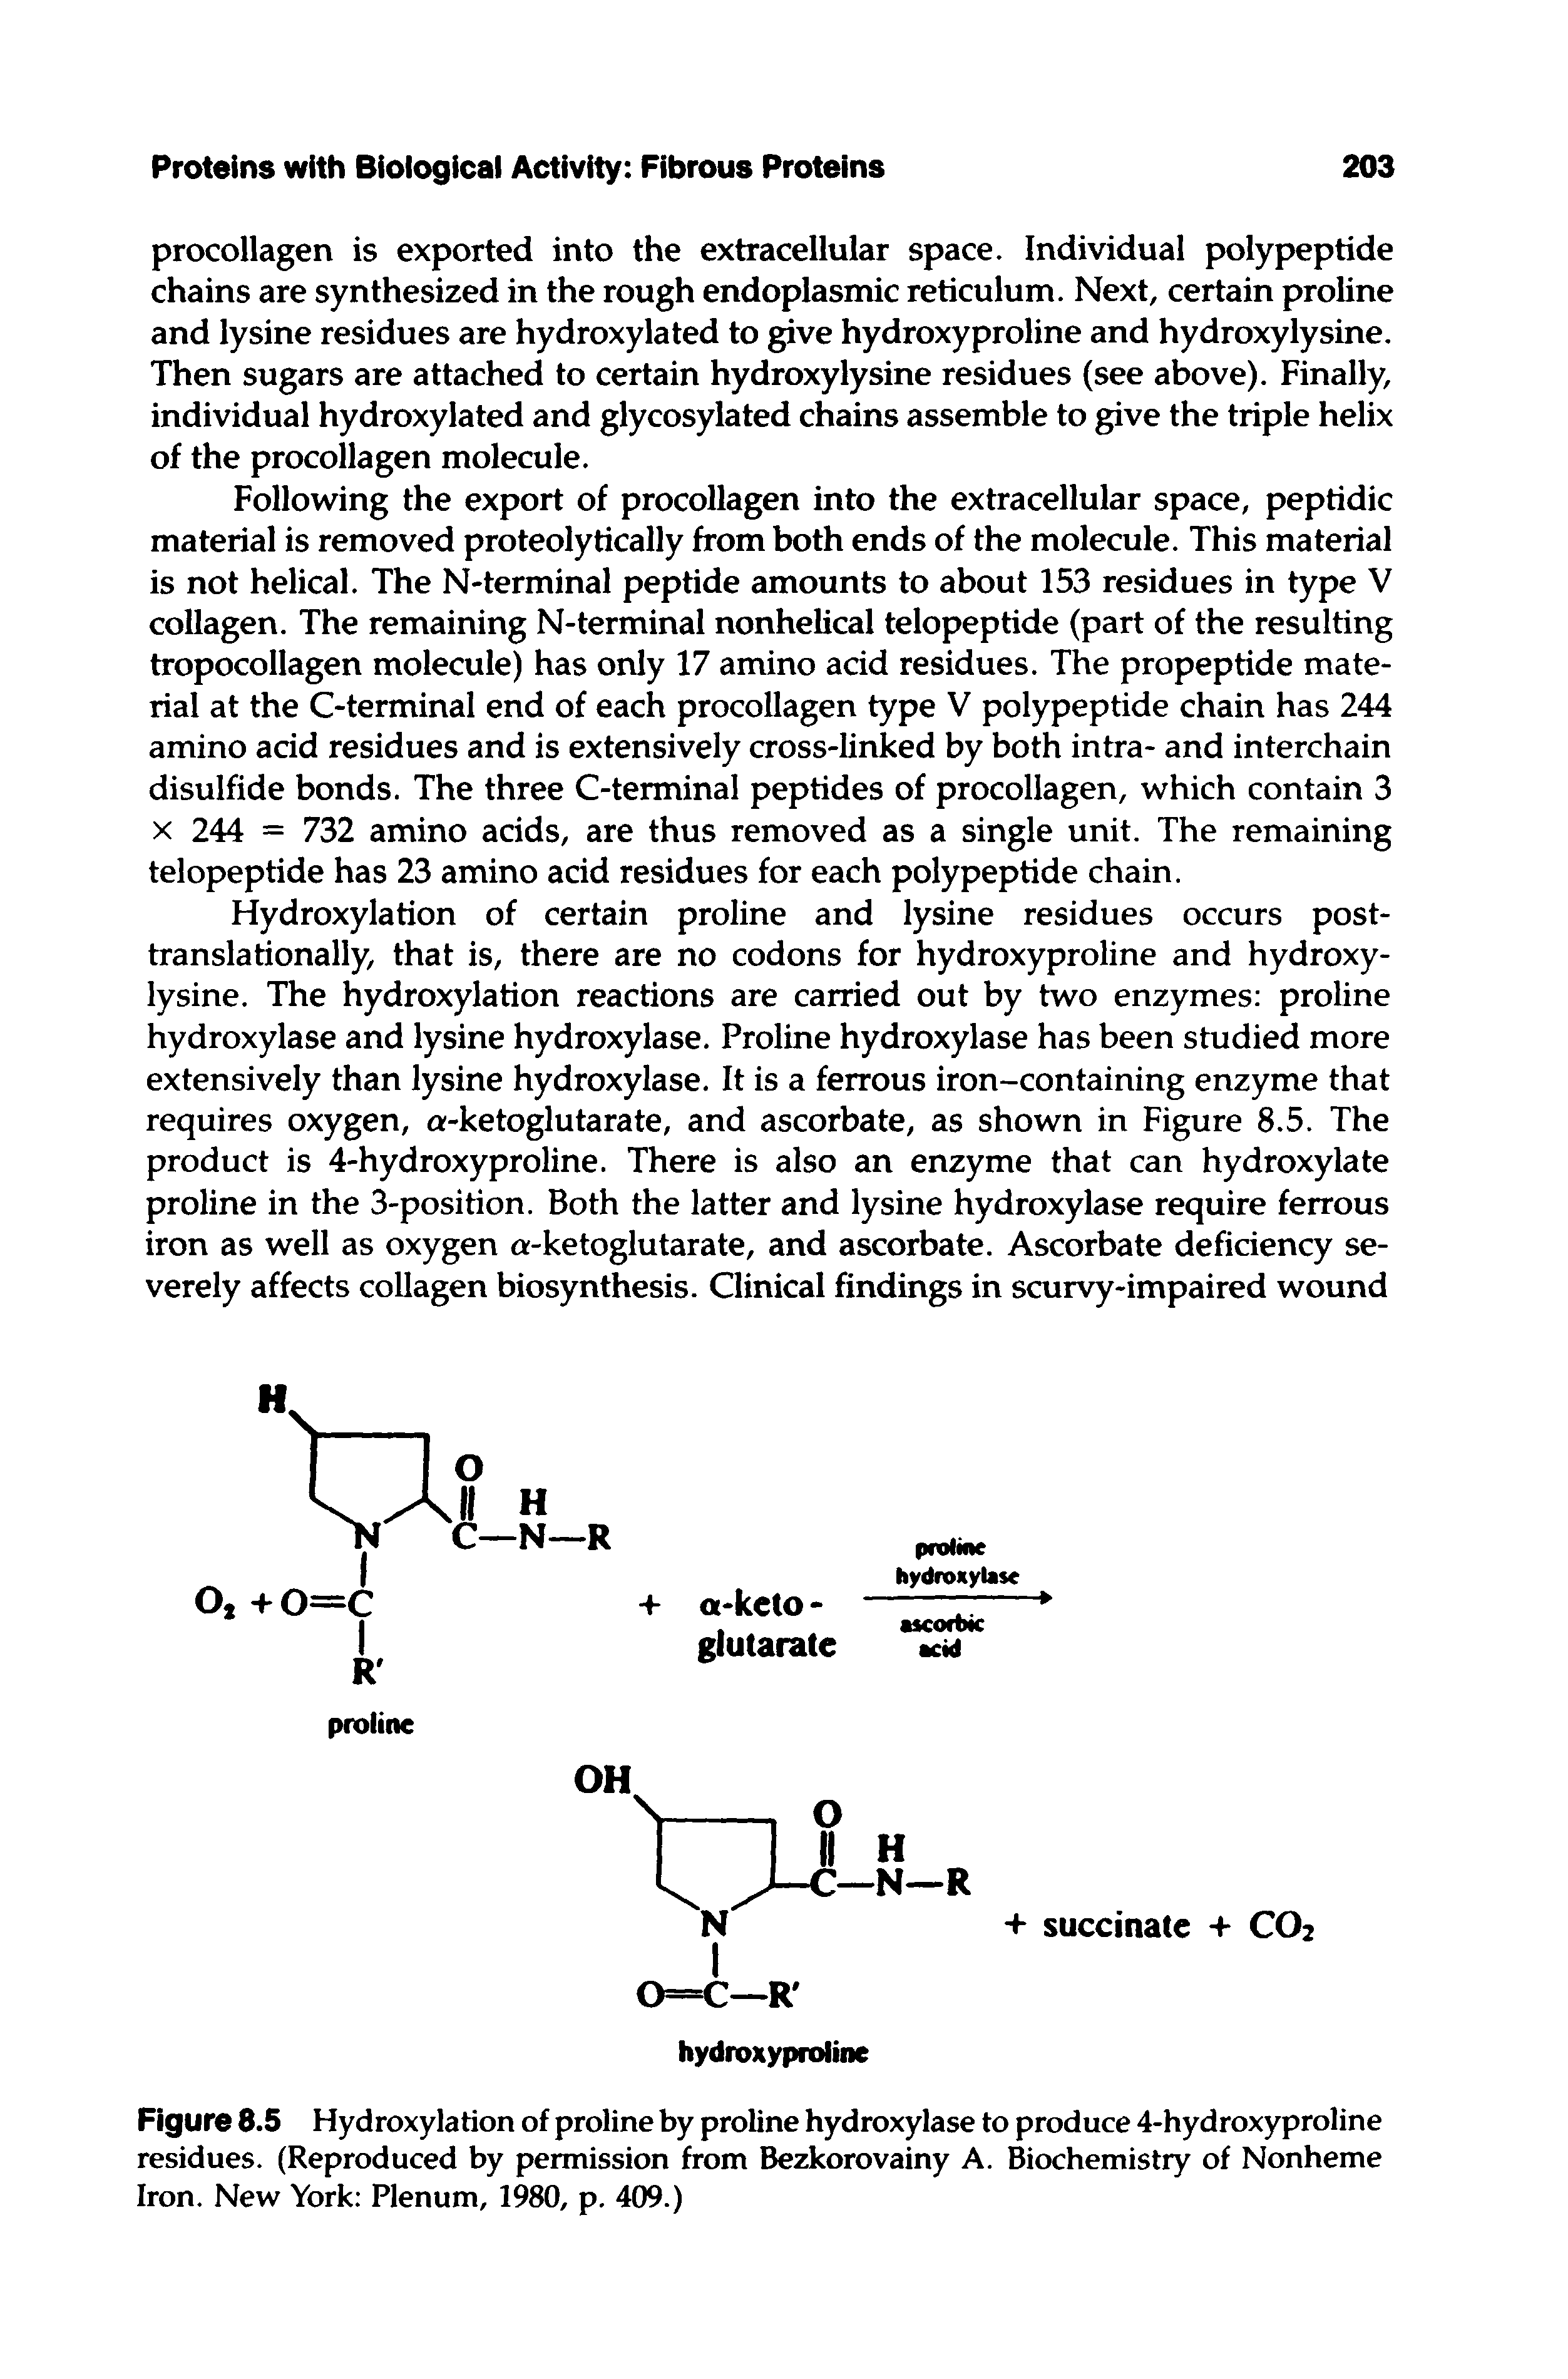 Figure 8.5 Hydroxylation of proline by proline hydroxylase to produce 4-hydroxyproline residues. (Reproduced by permission from Bezkorovainy A. Biochemistry of Nonheme Iron. New York Plenum, 1980, p. 409.)...